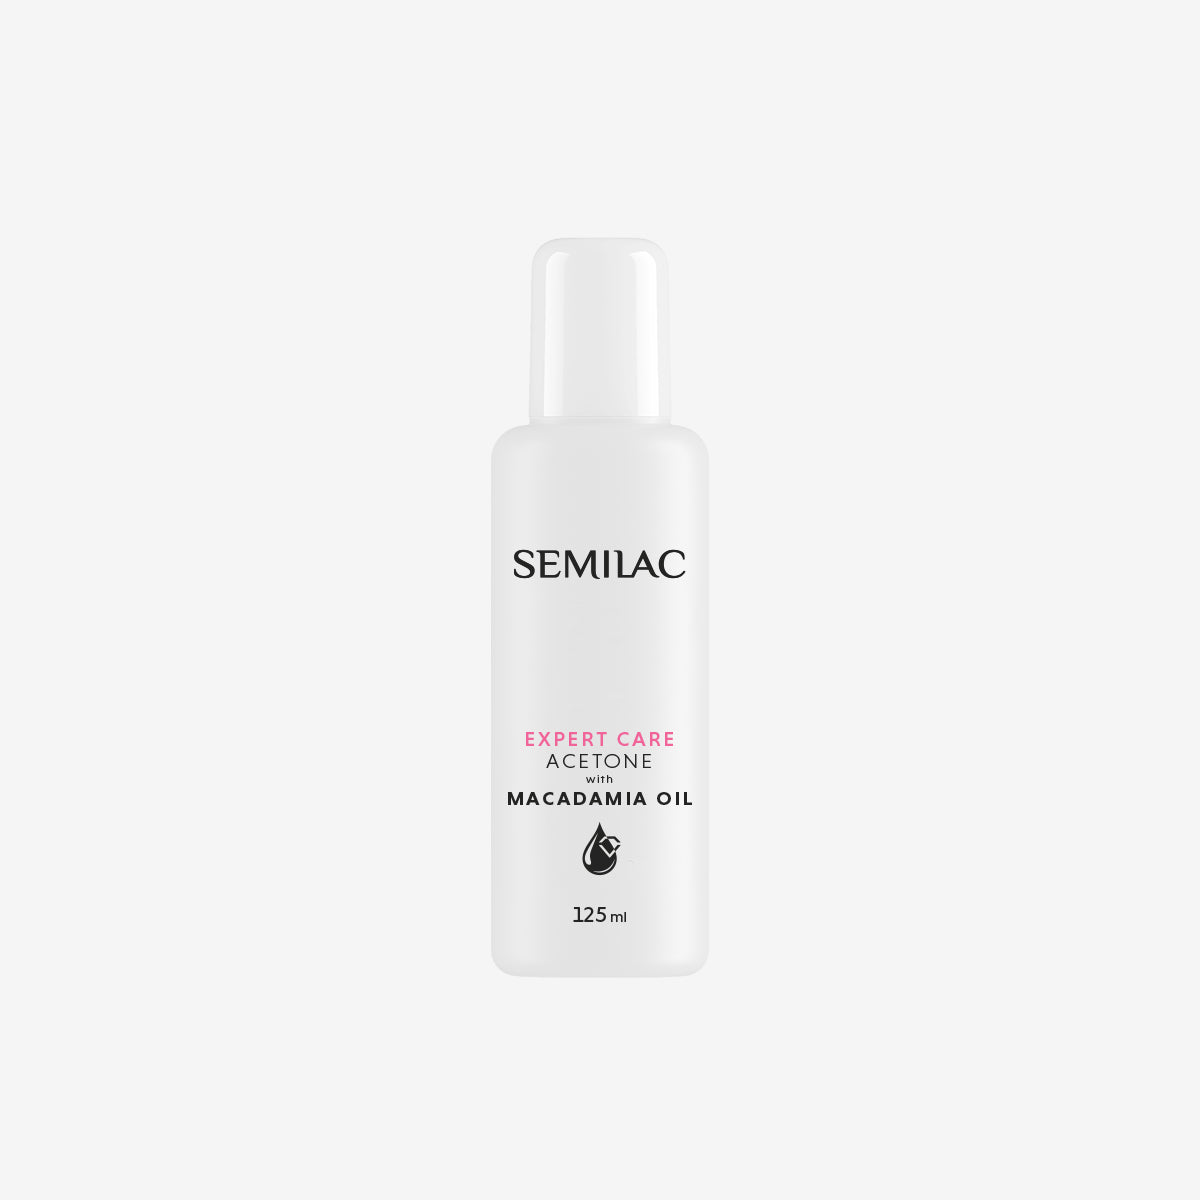 Semilac Acetone EXPERT CARE with Macadamia Oil 125ml - Semilac UK